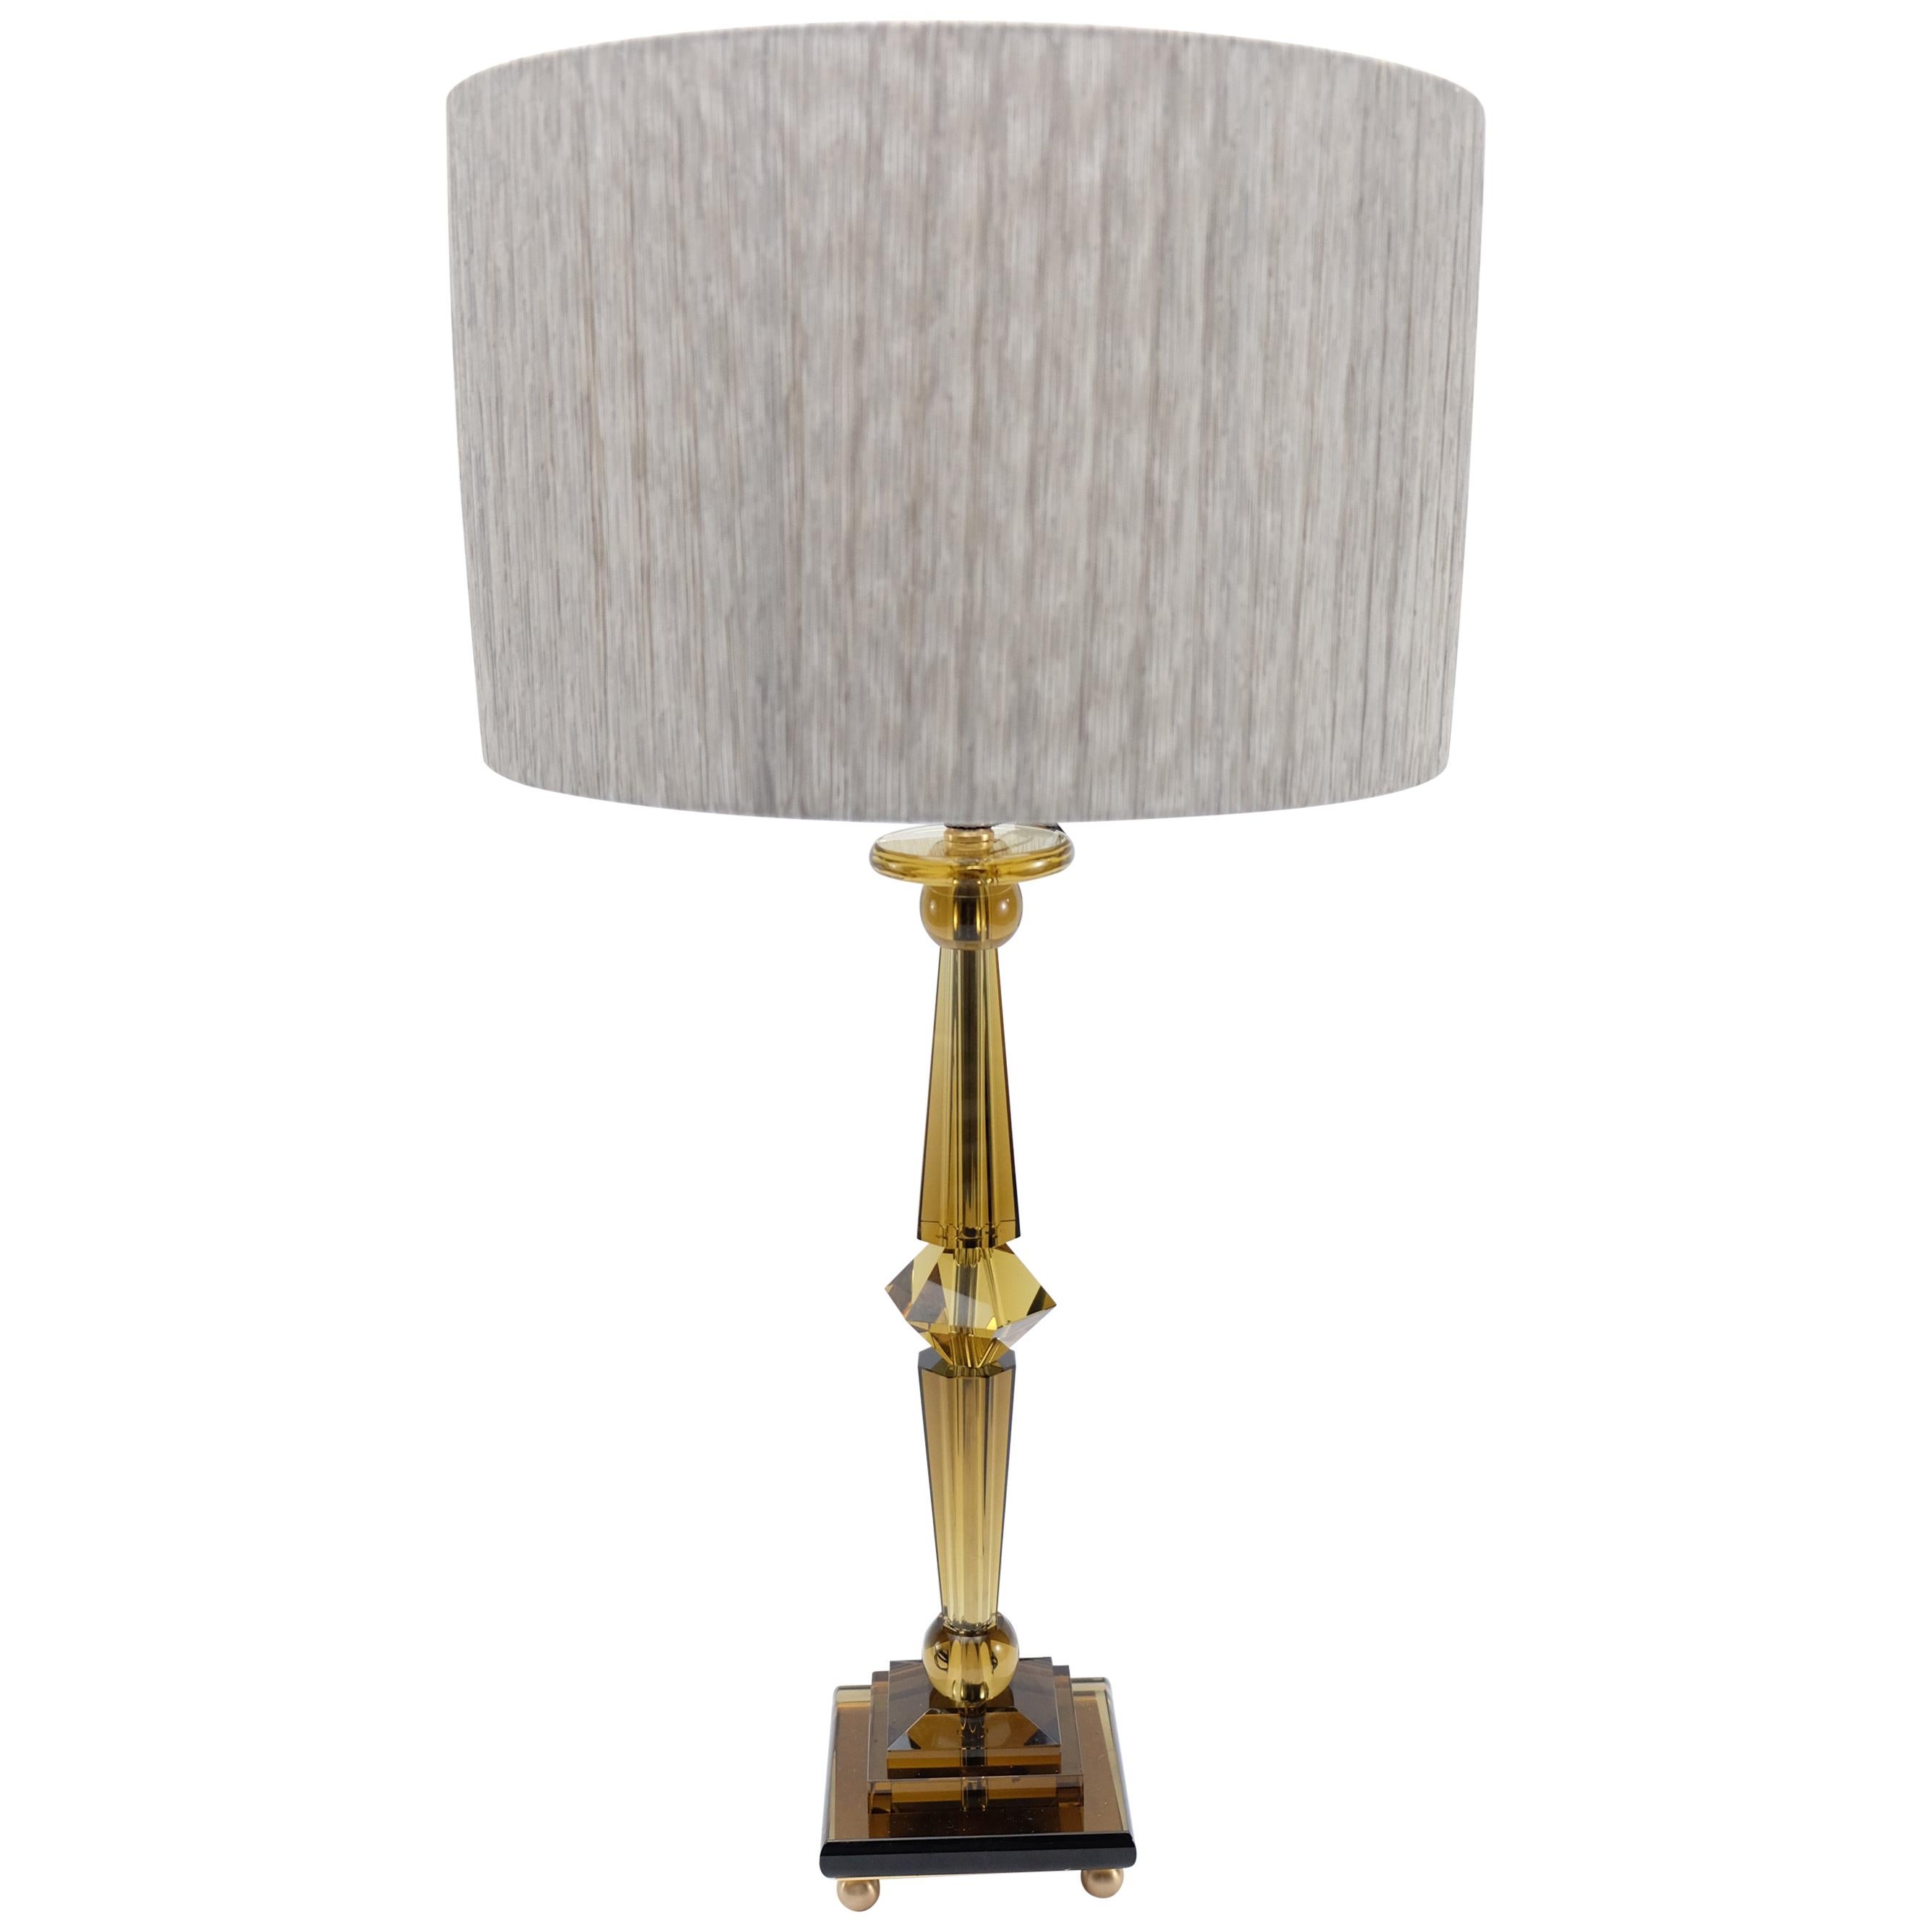 Attilio Amato for Laudarte Srl Prisma Big Table Lamp, Pair Available For Sale